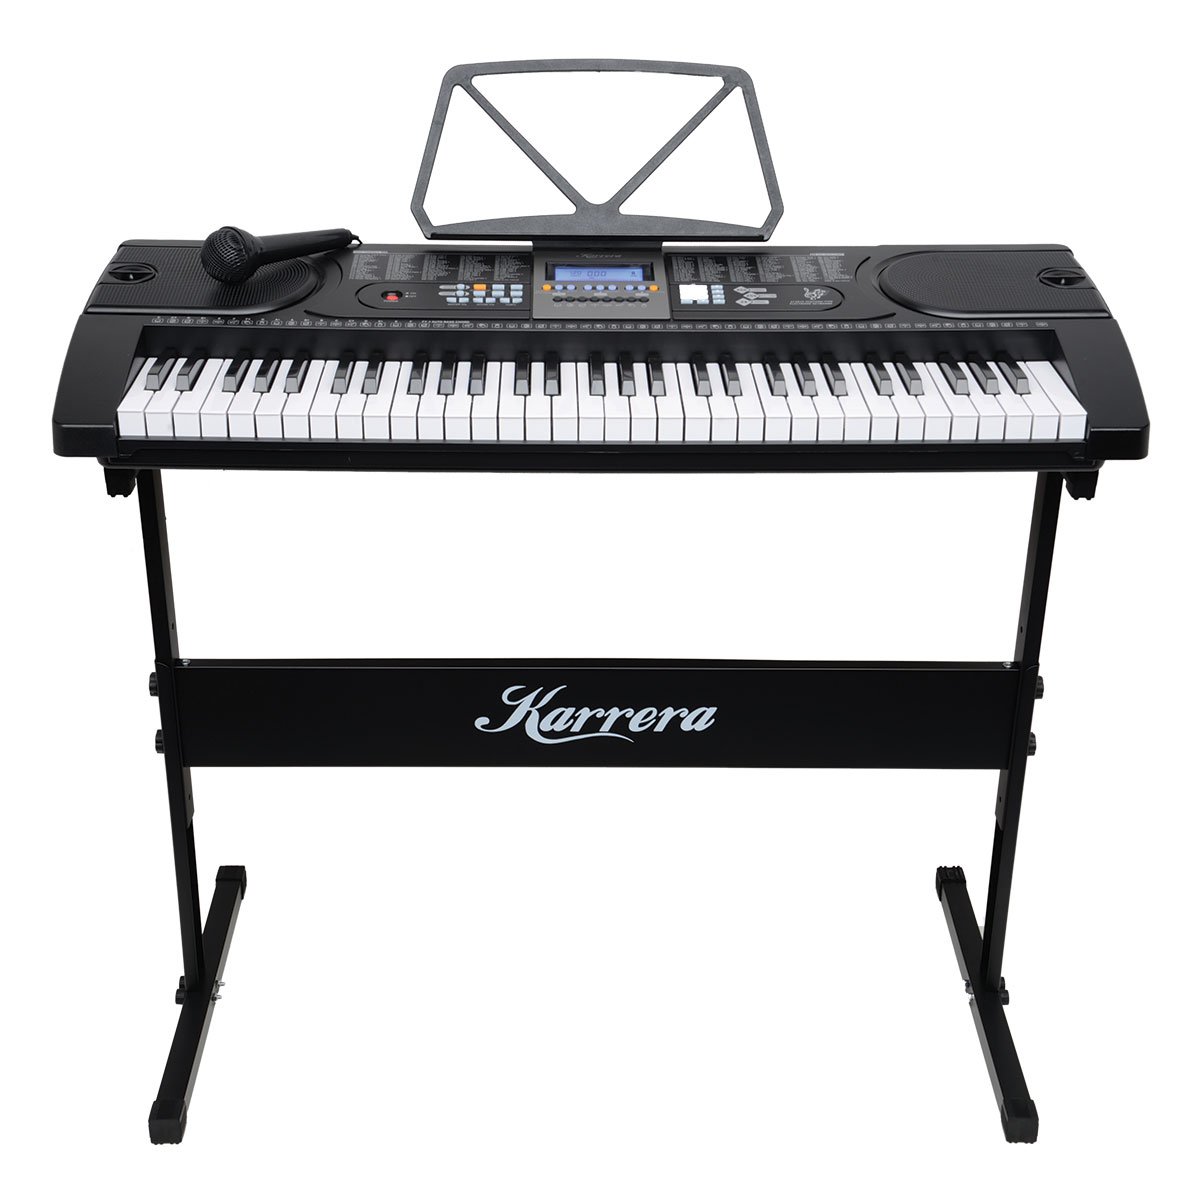 Karrera 61 Keys Electronic Keyboard Piano with Stand - Black 2